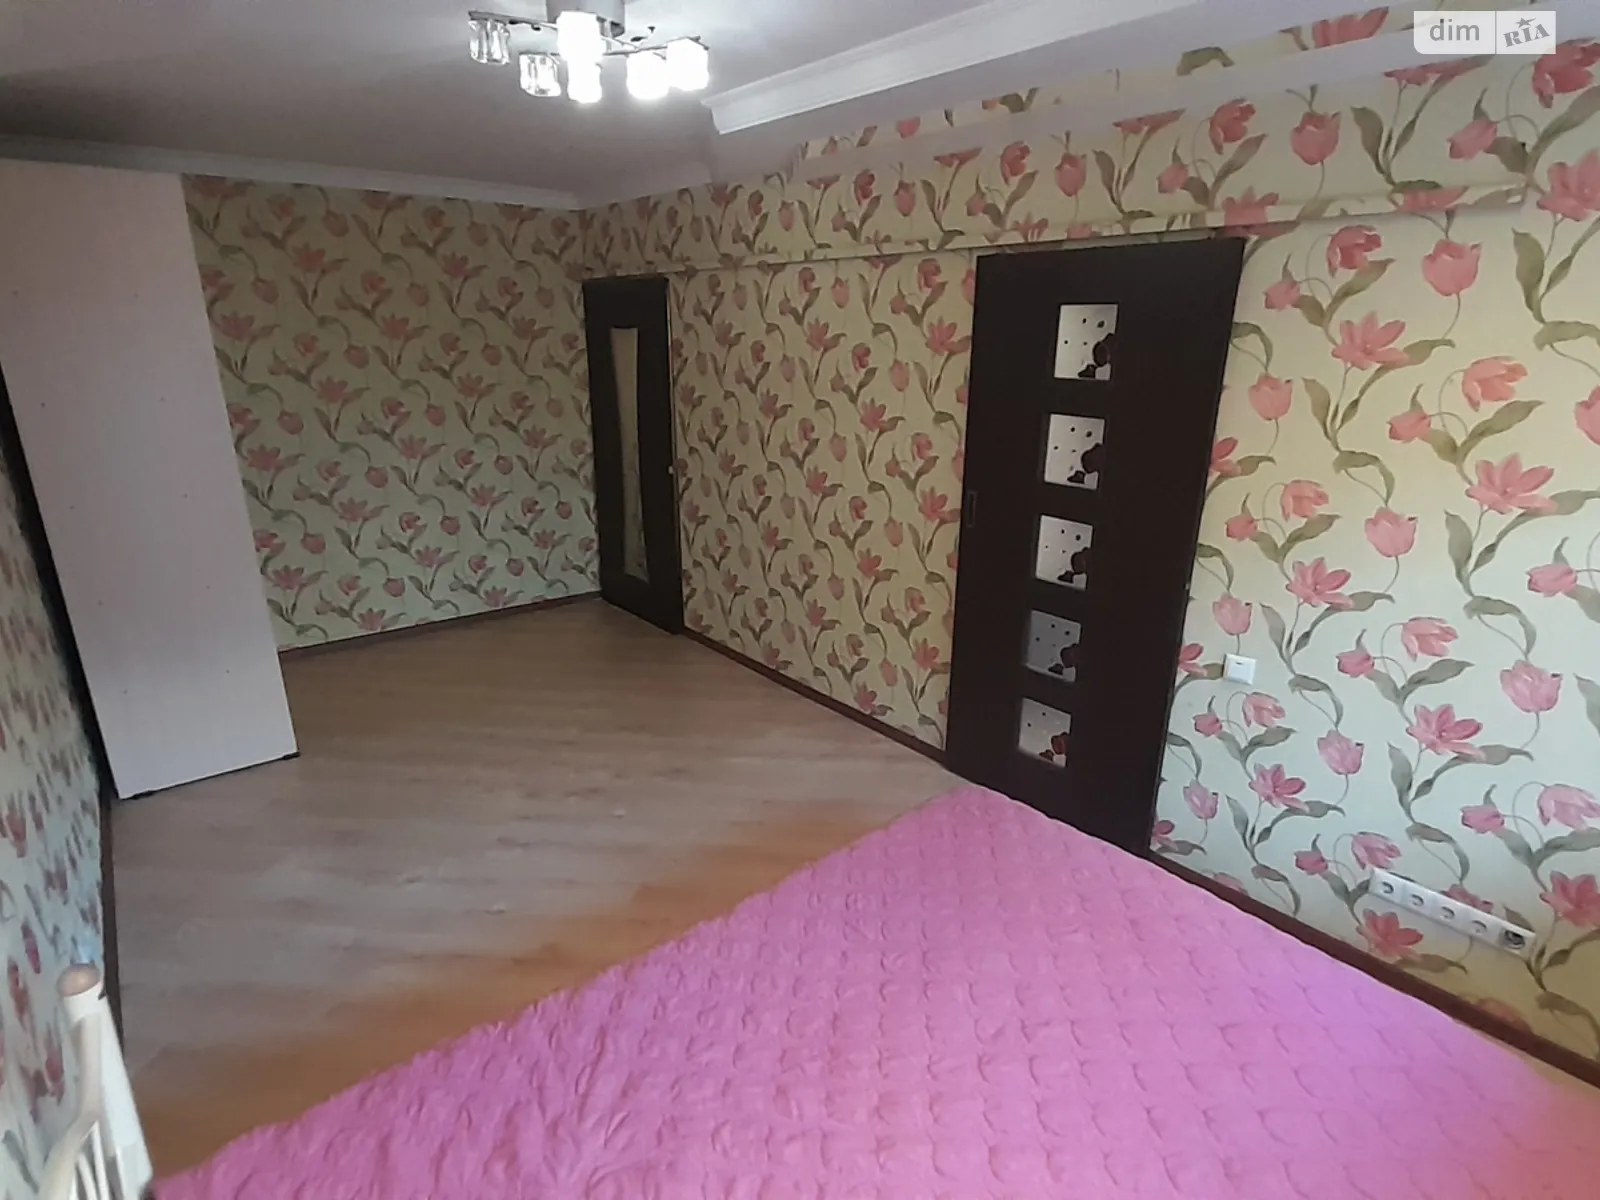 1-кімнатна квартира 28.3 кв. м у Луцьку, цена: 7000 грн